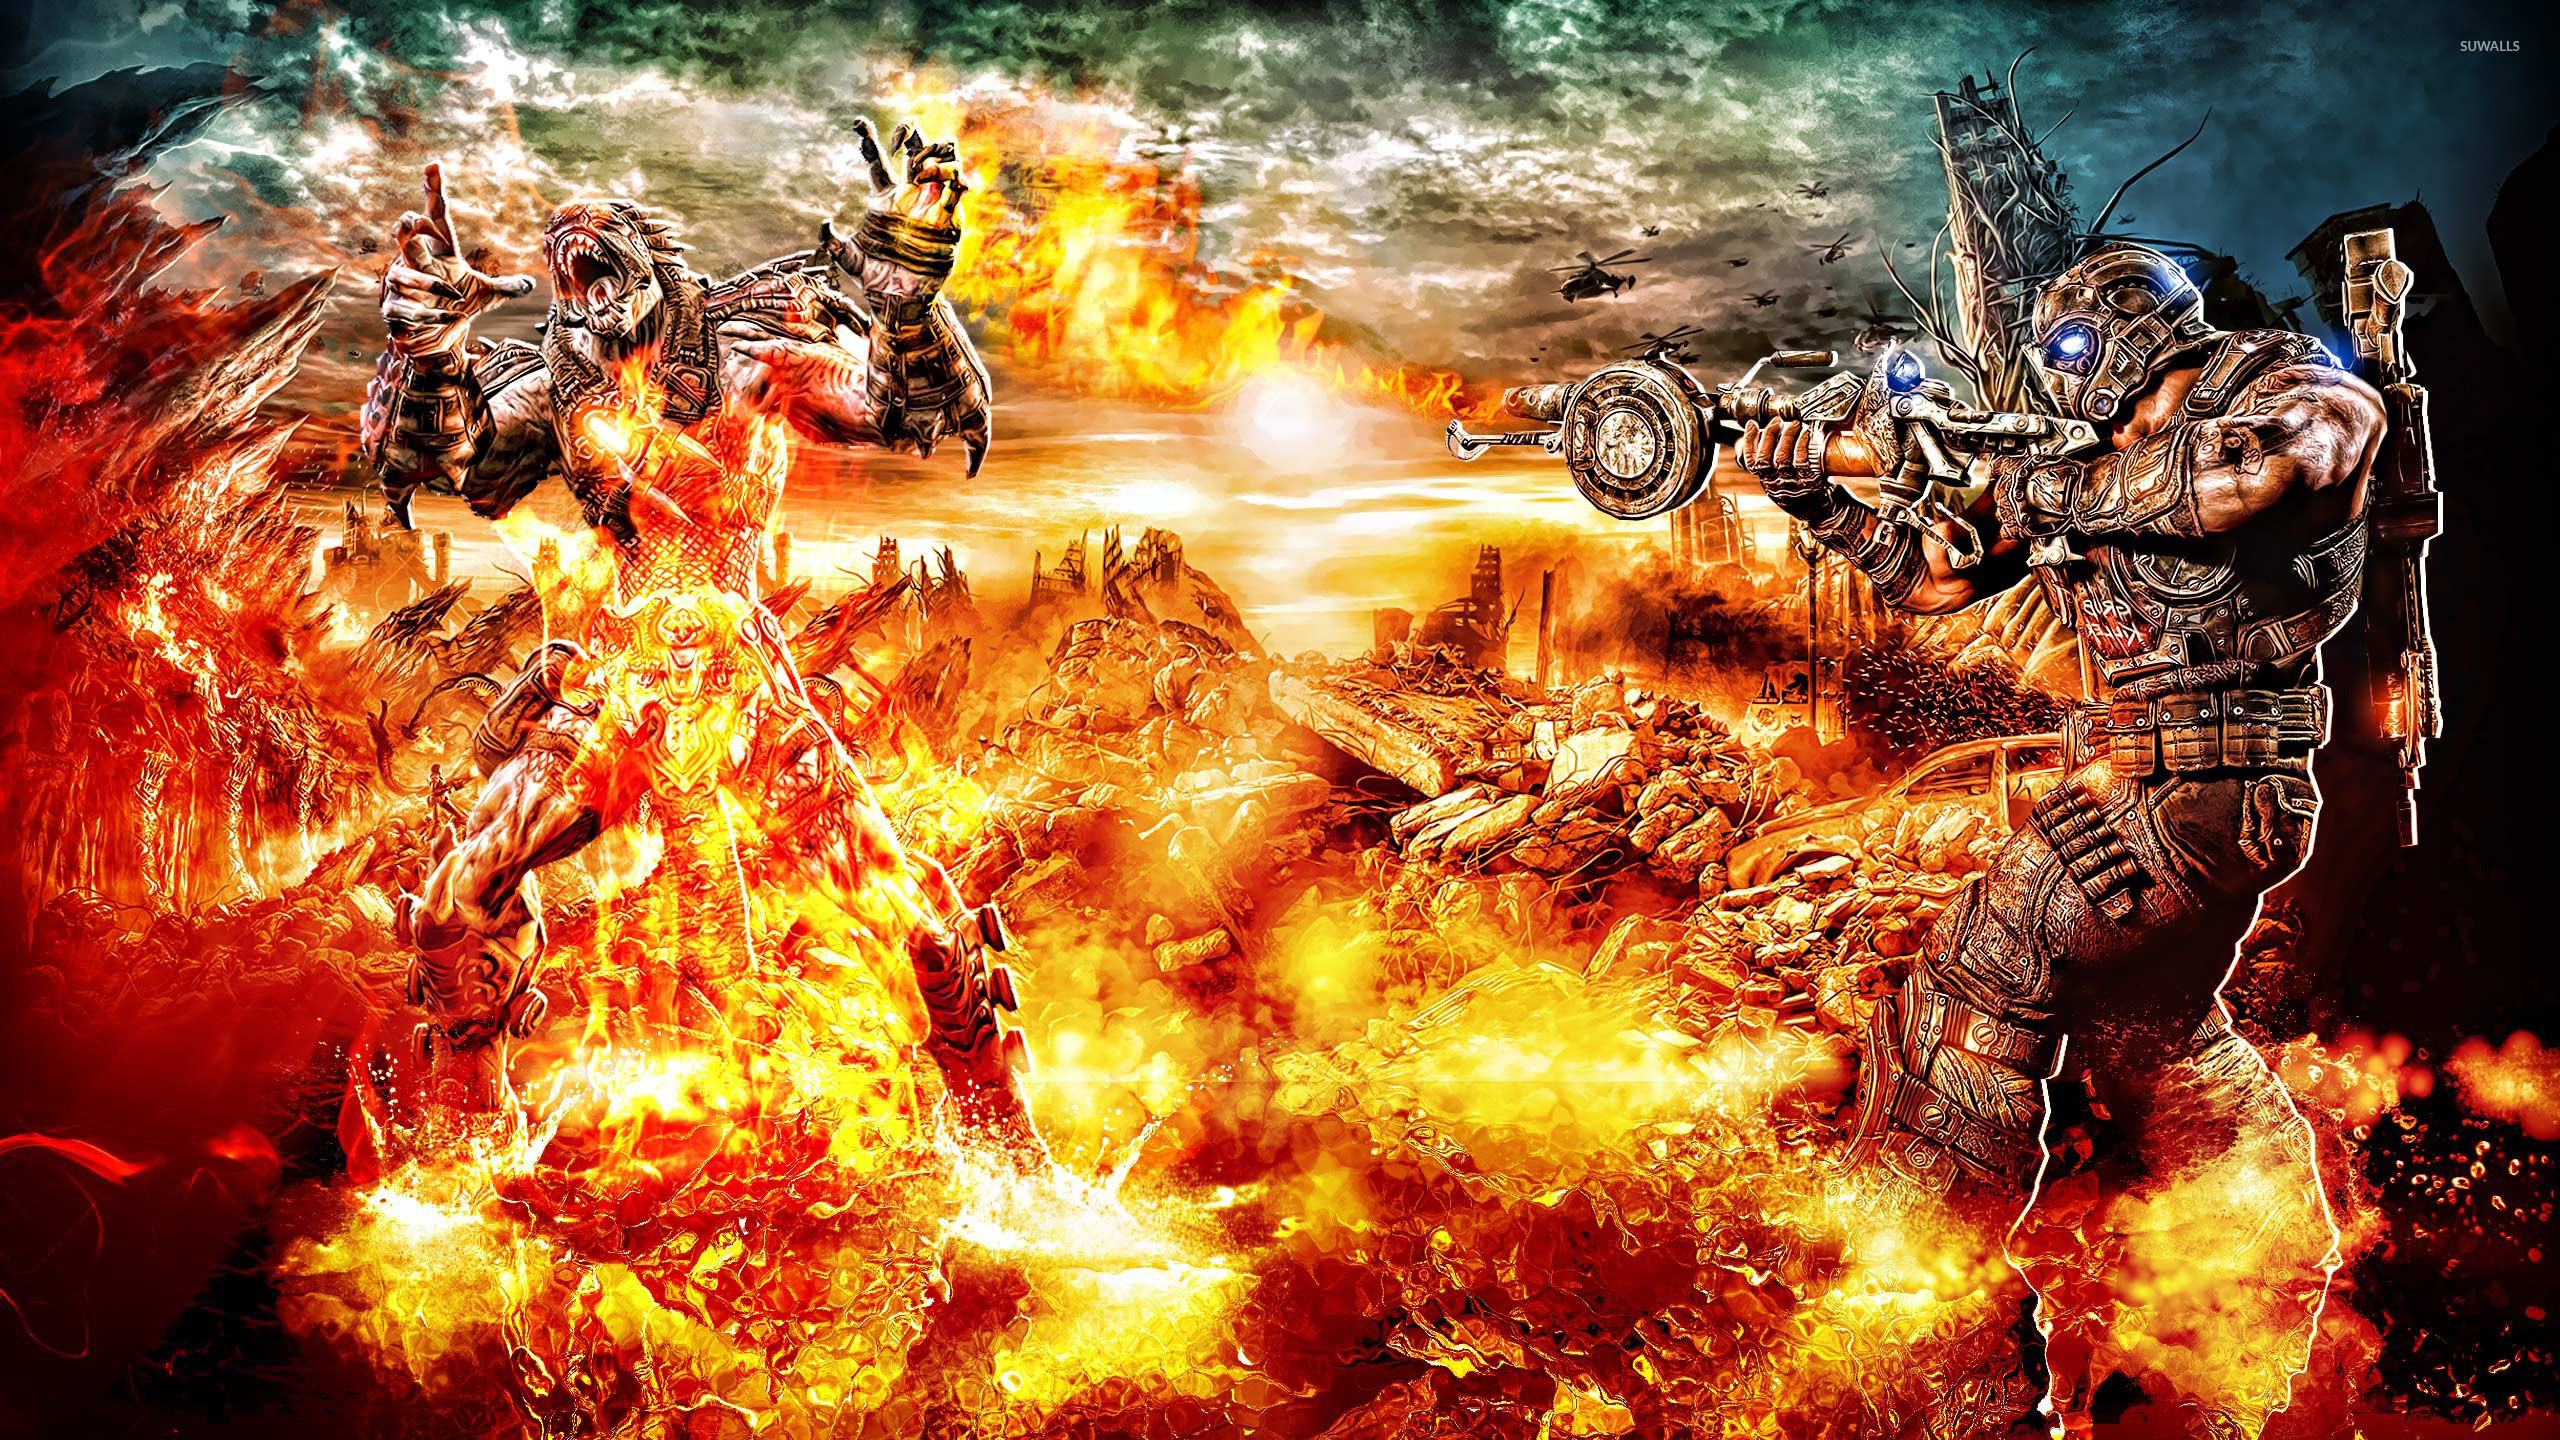 2560x1440 Gears of War 3 [10] wallpaper